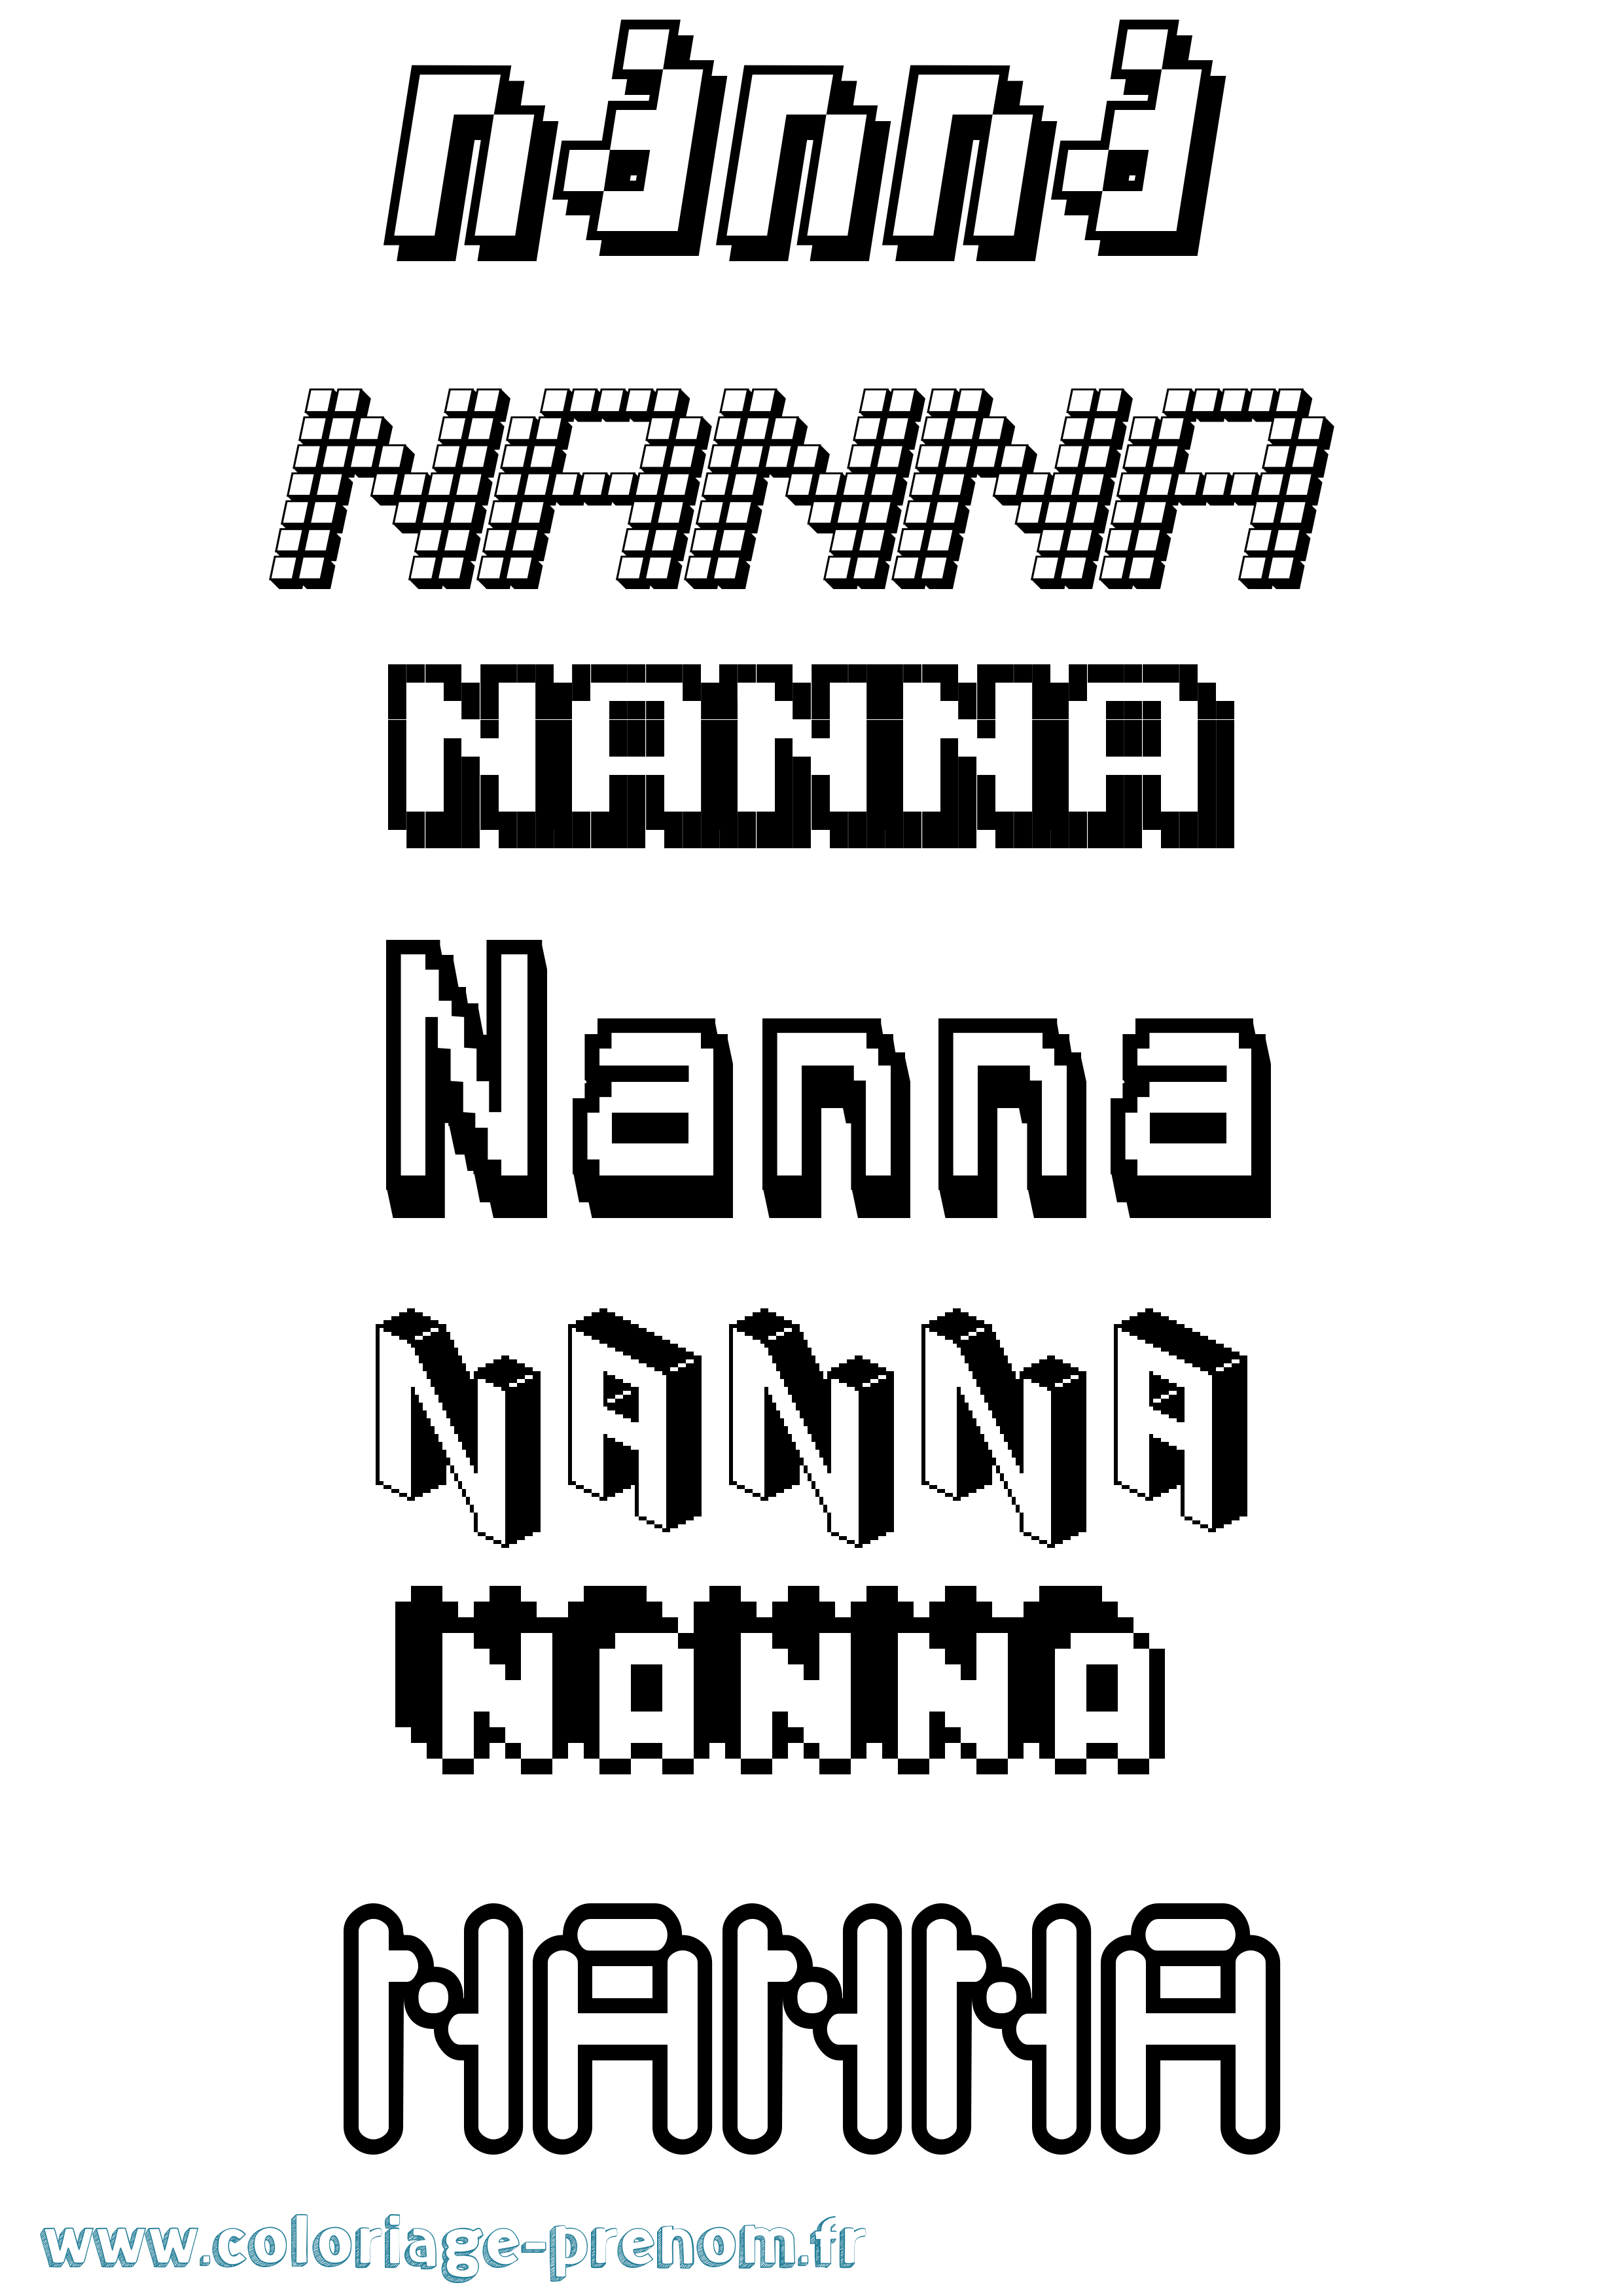 Coloriage prénom Nanna Pixel